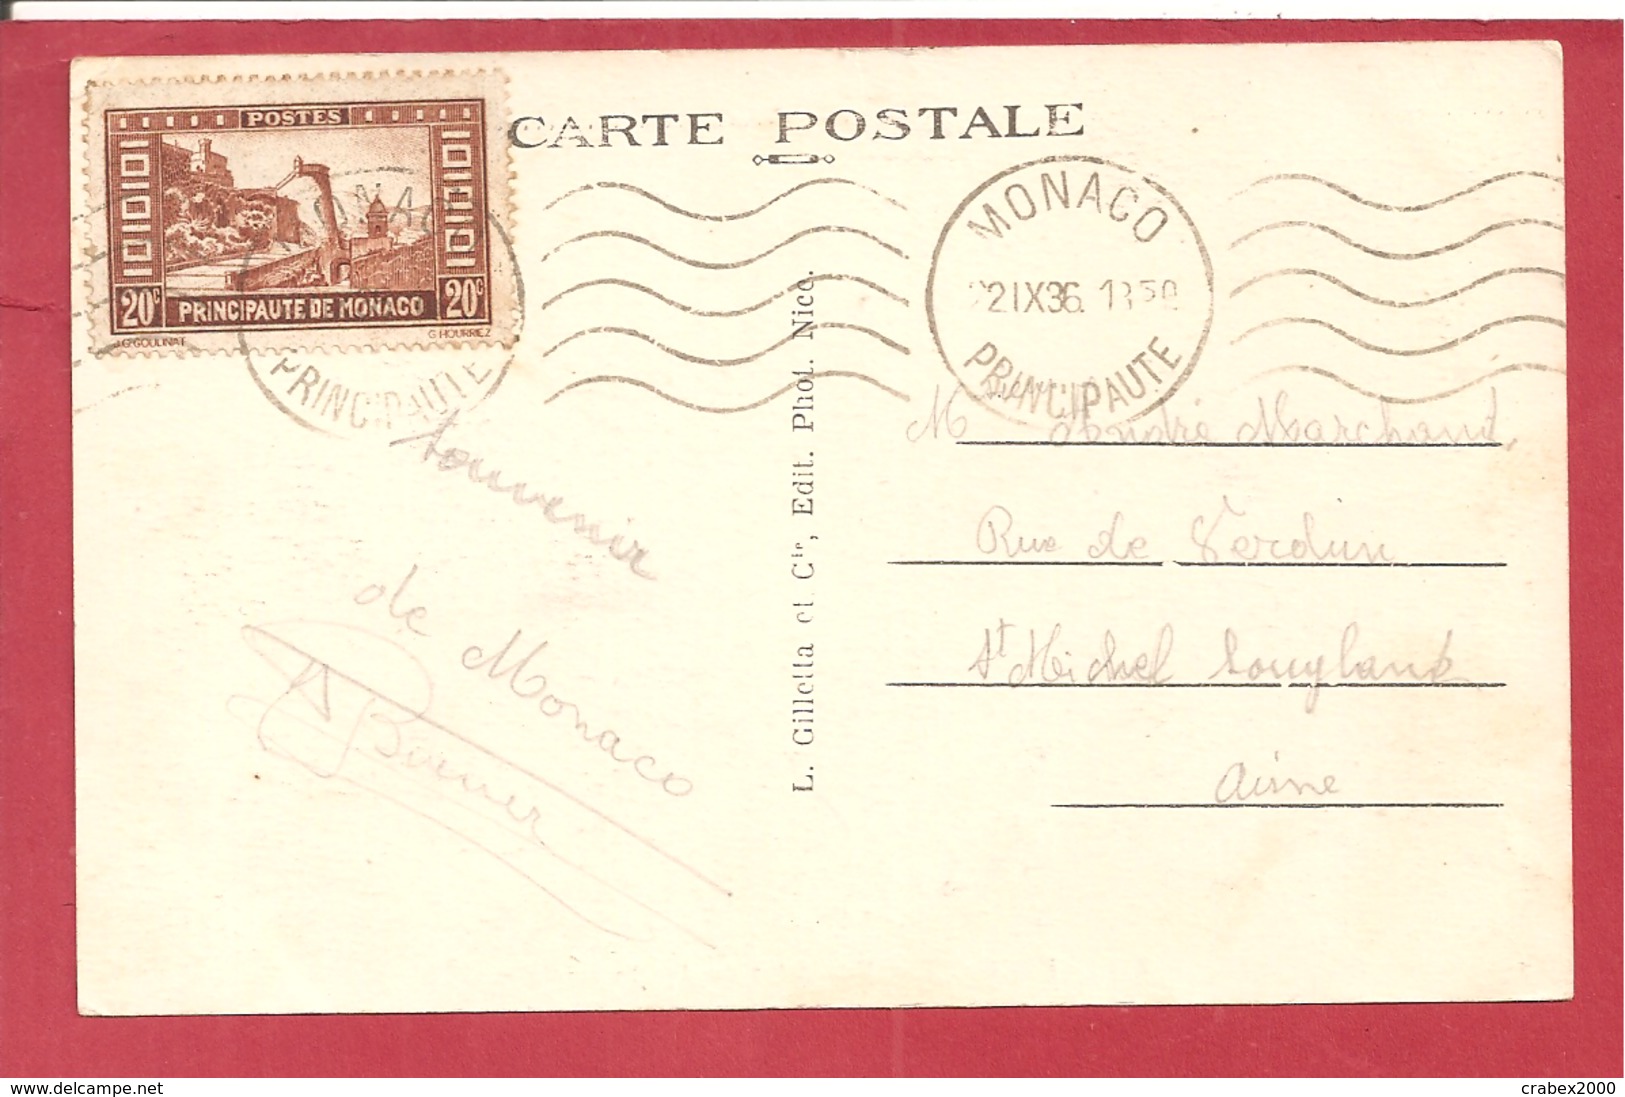 Y&T N°120  MONTE CARLO   Vers FRANCE  1936 VOIR LES 2 SCANS - Covers & Documents